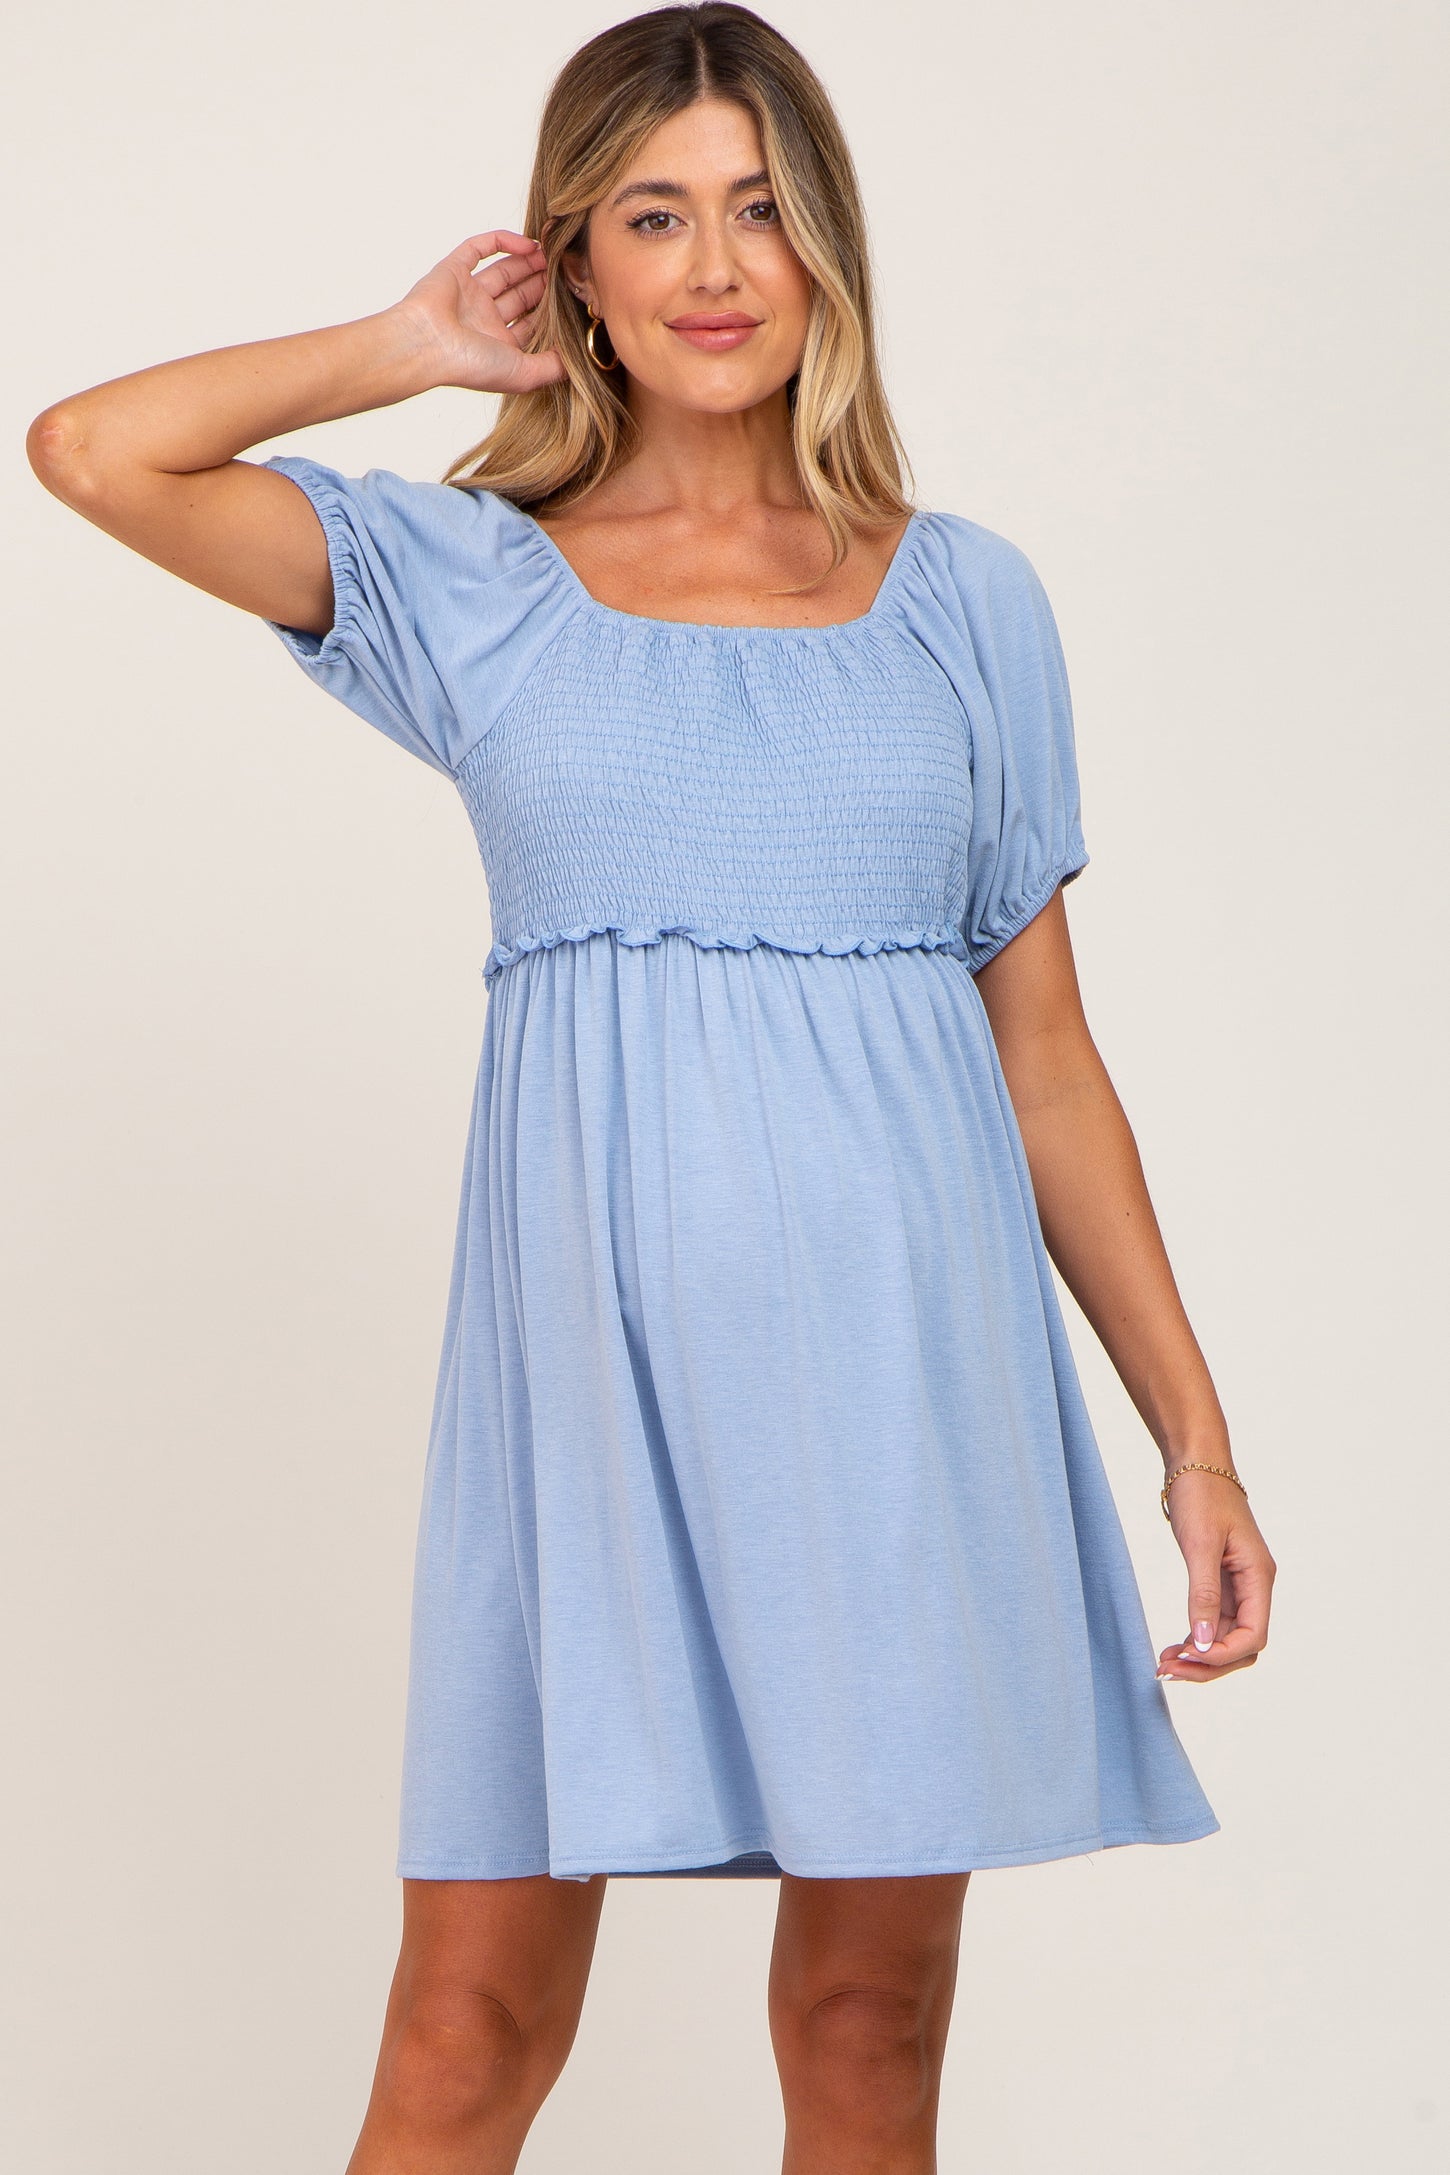 Blue Smocked Maternity Dress